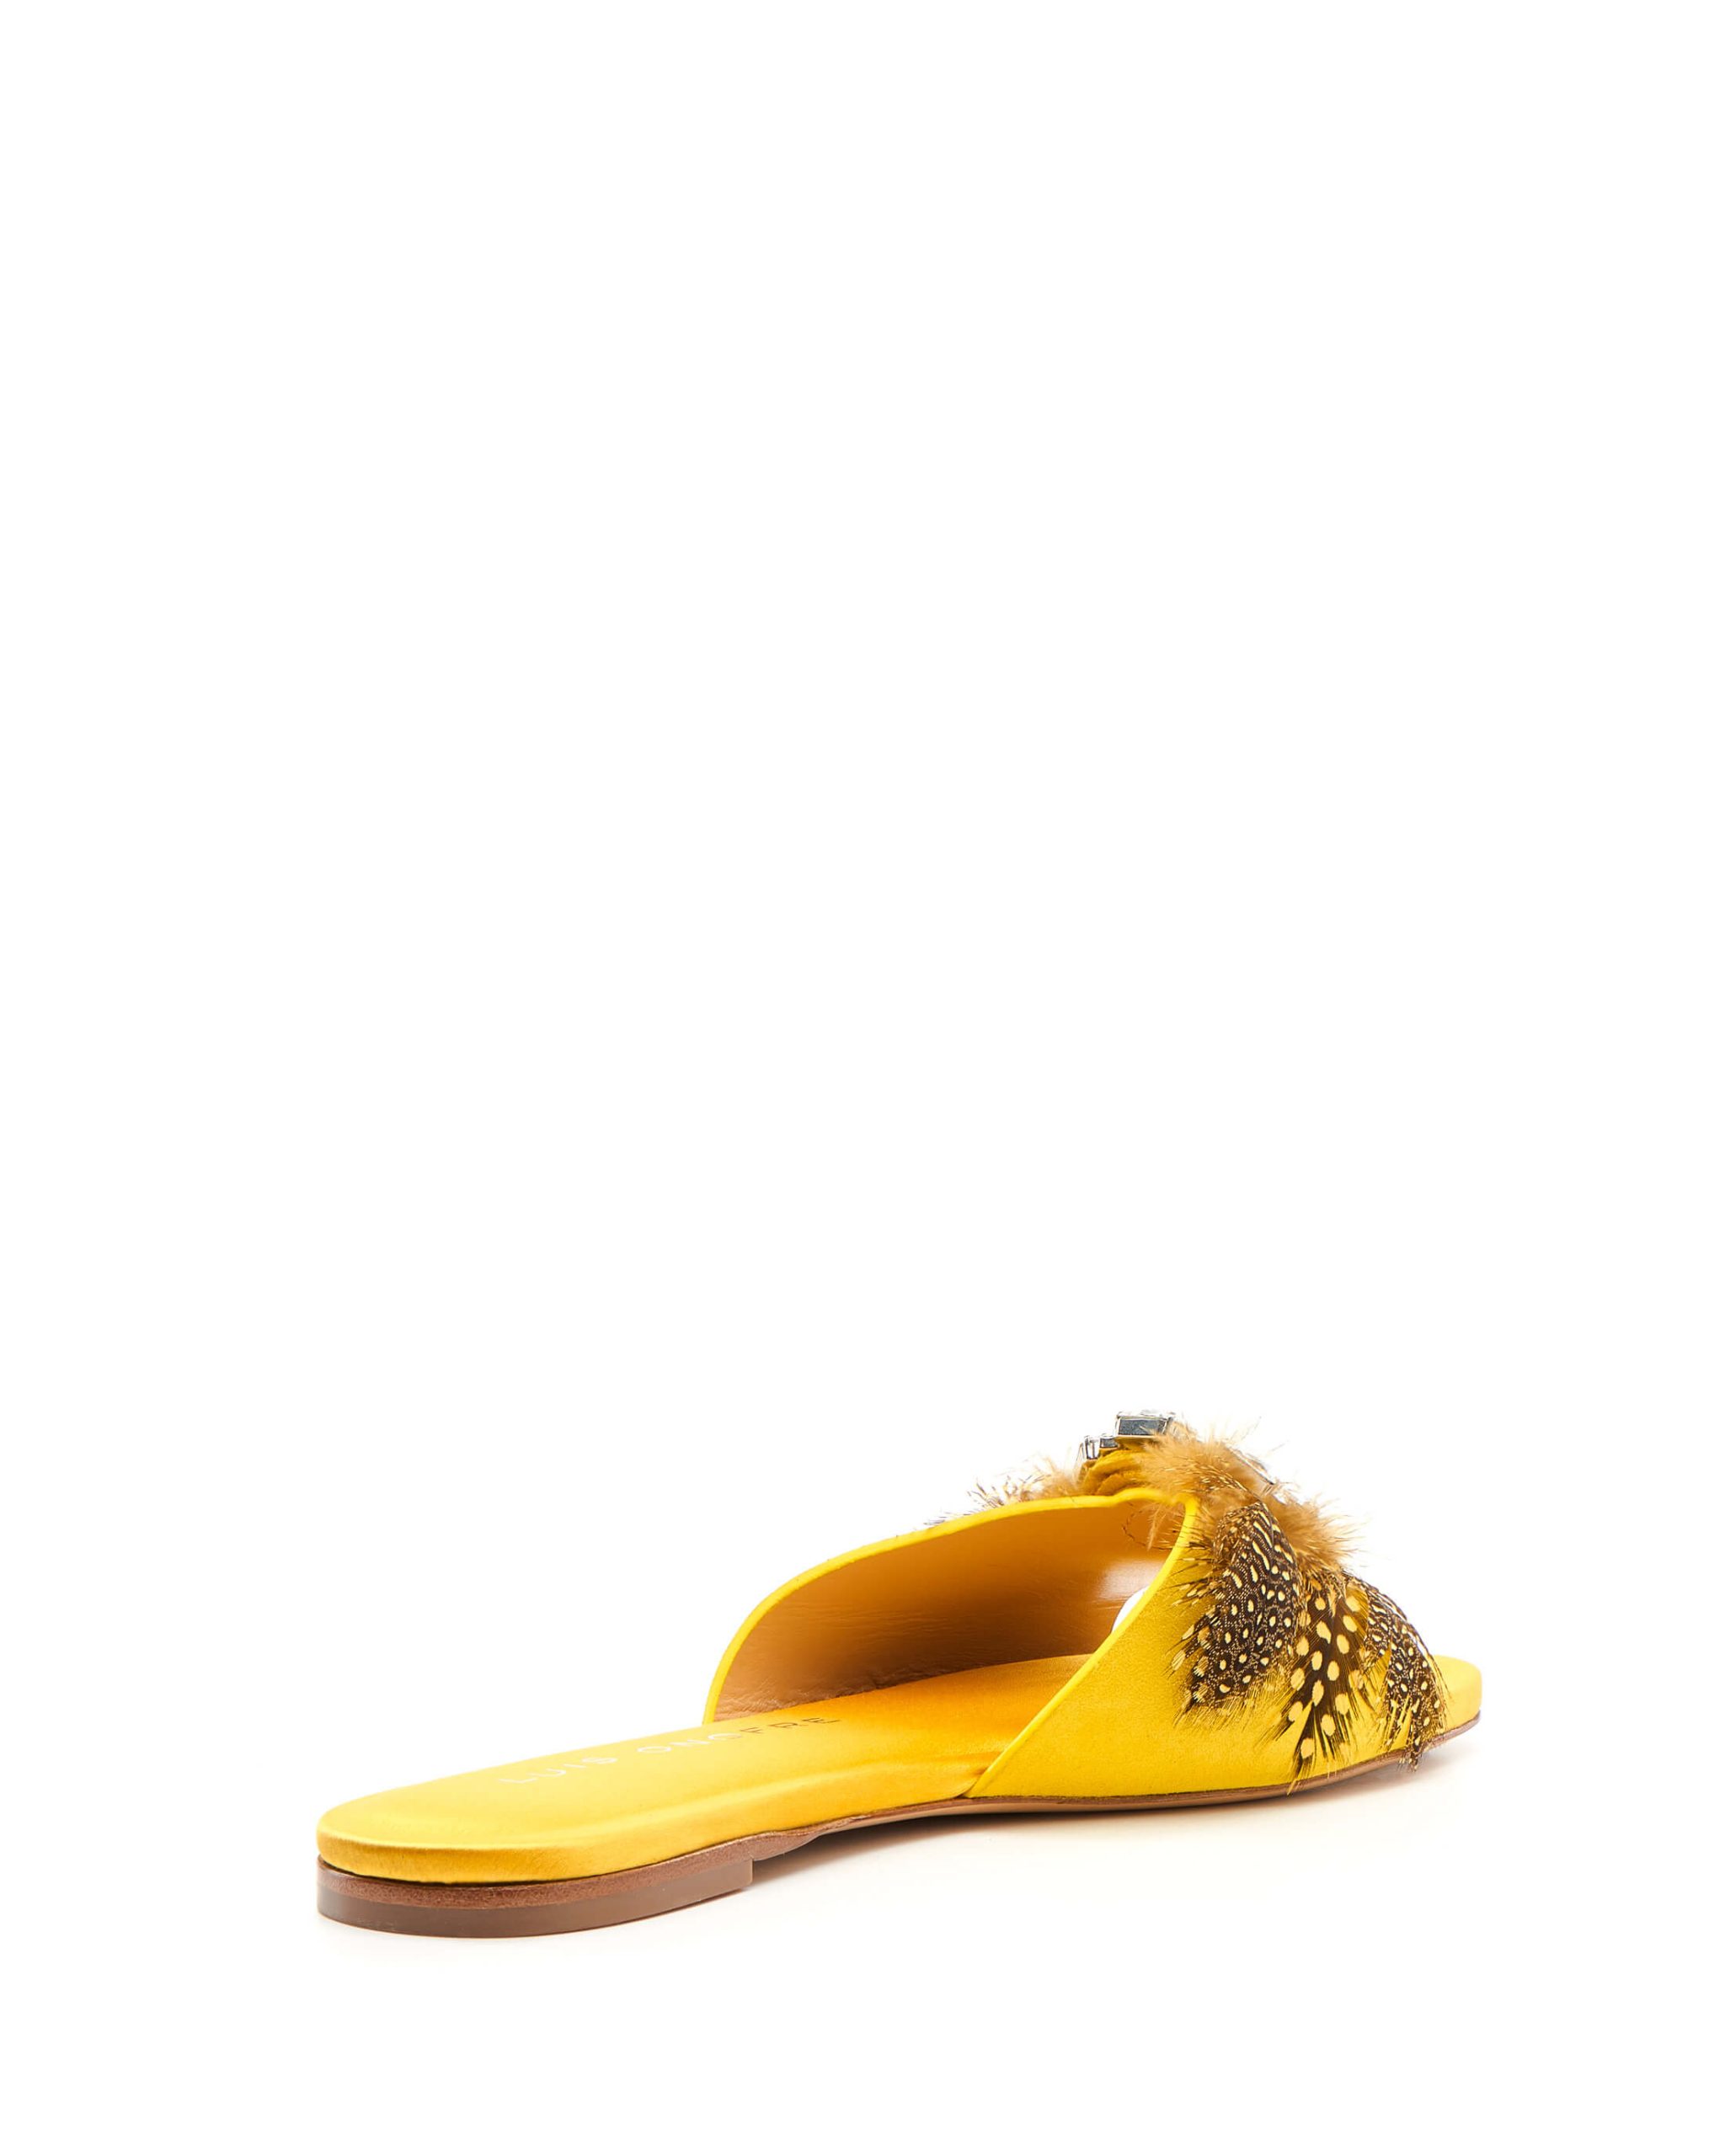 Luis Onofre Portuguese Shoes FW22 – 5331_02 – Theseus Yellow-3